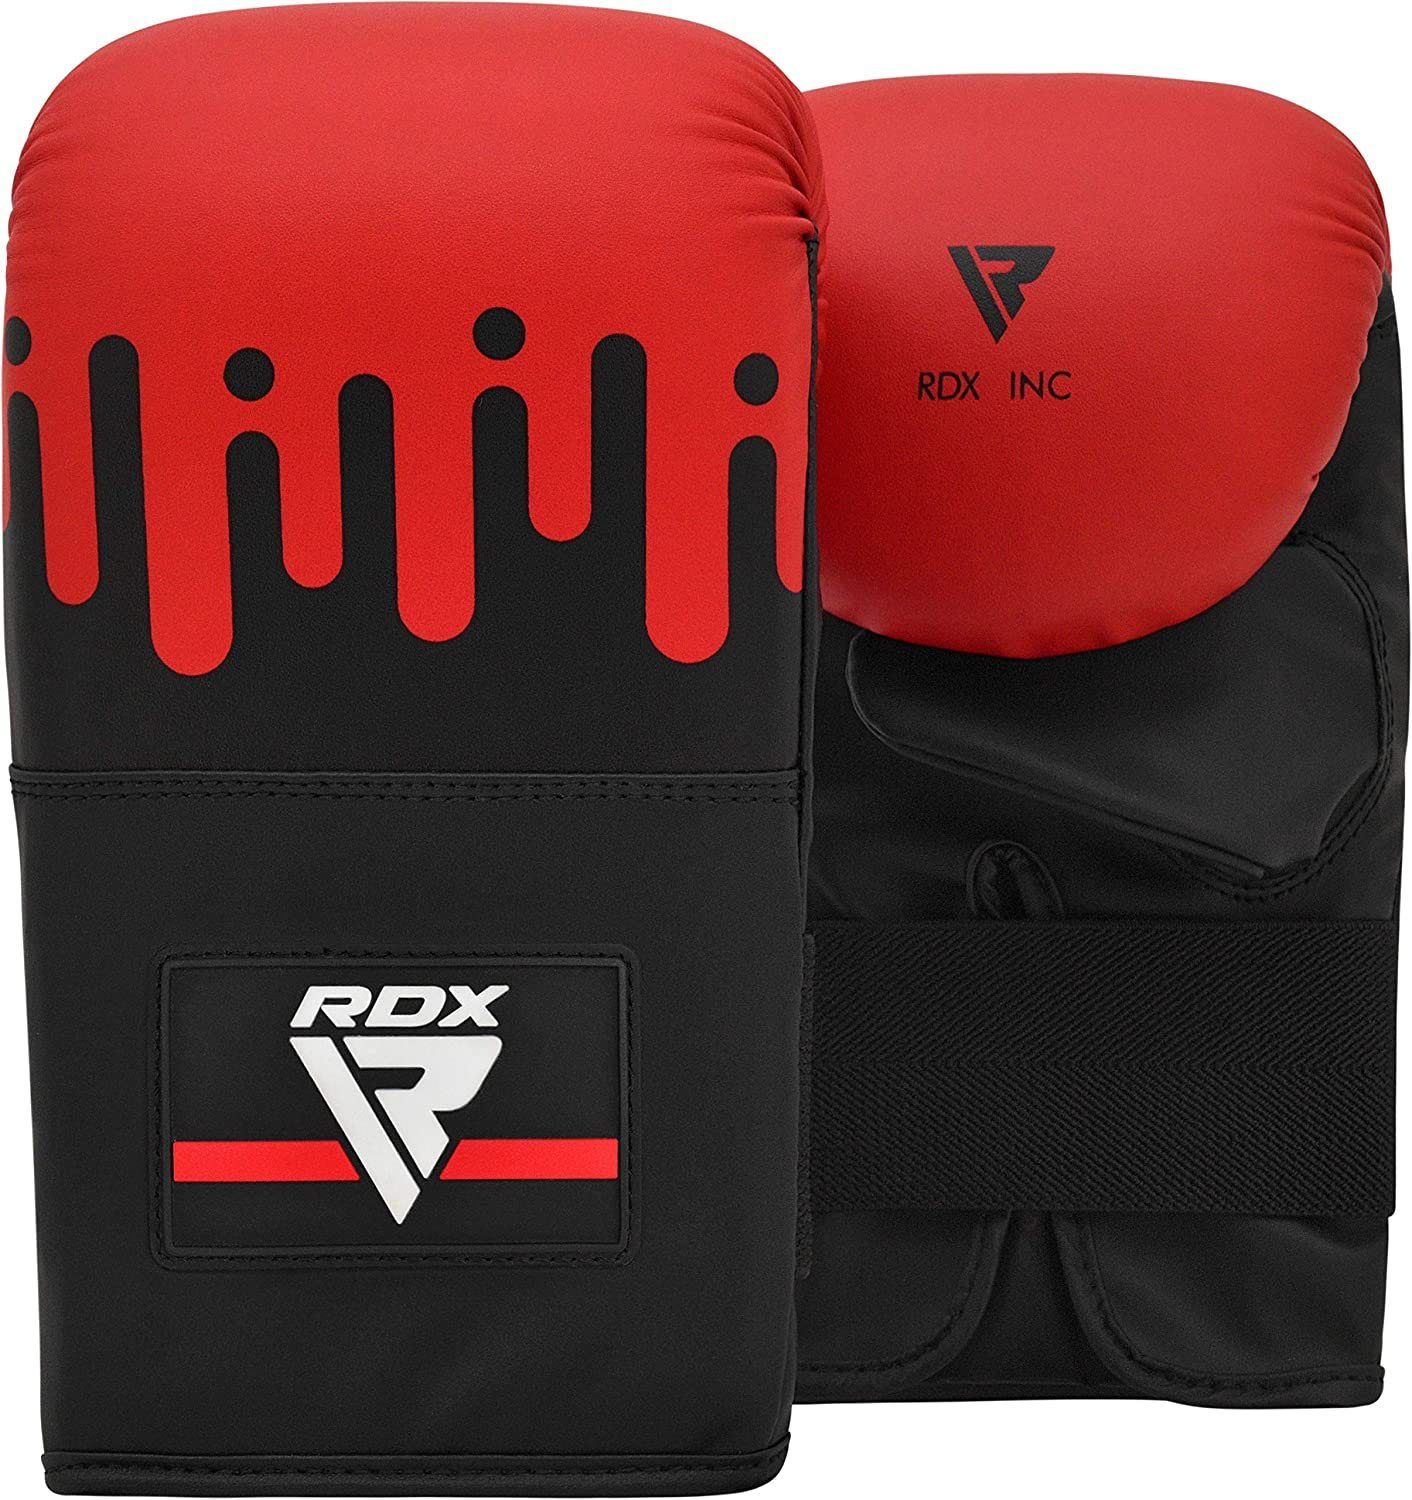 Maya RDX Boxhandschuhe Hide RDX Boxhandschuhe Kampfsport, Leder Boxsackhandschuhe, Sports